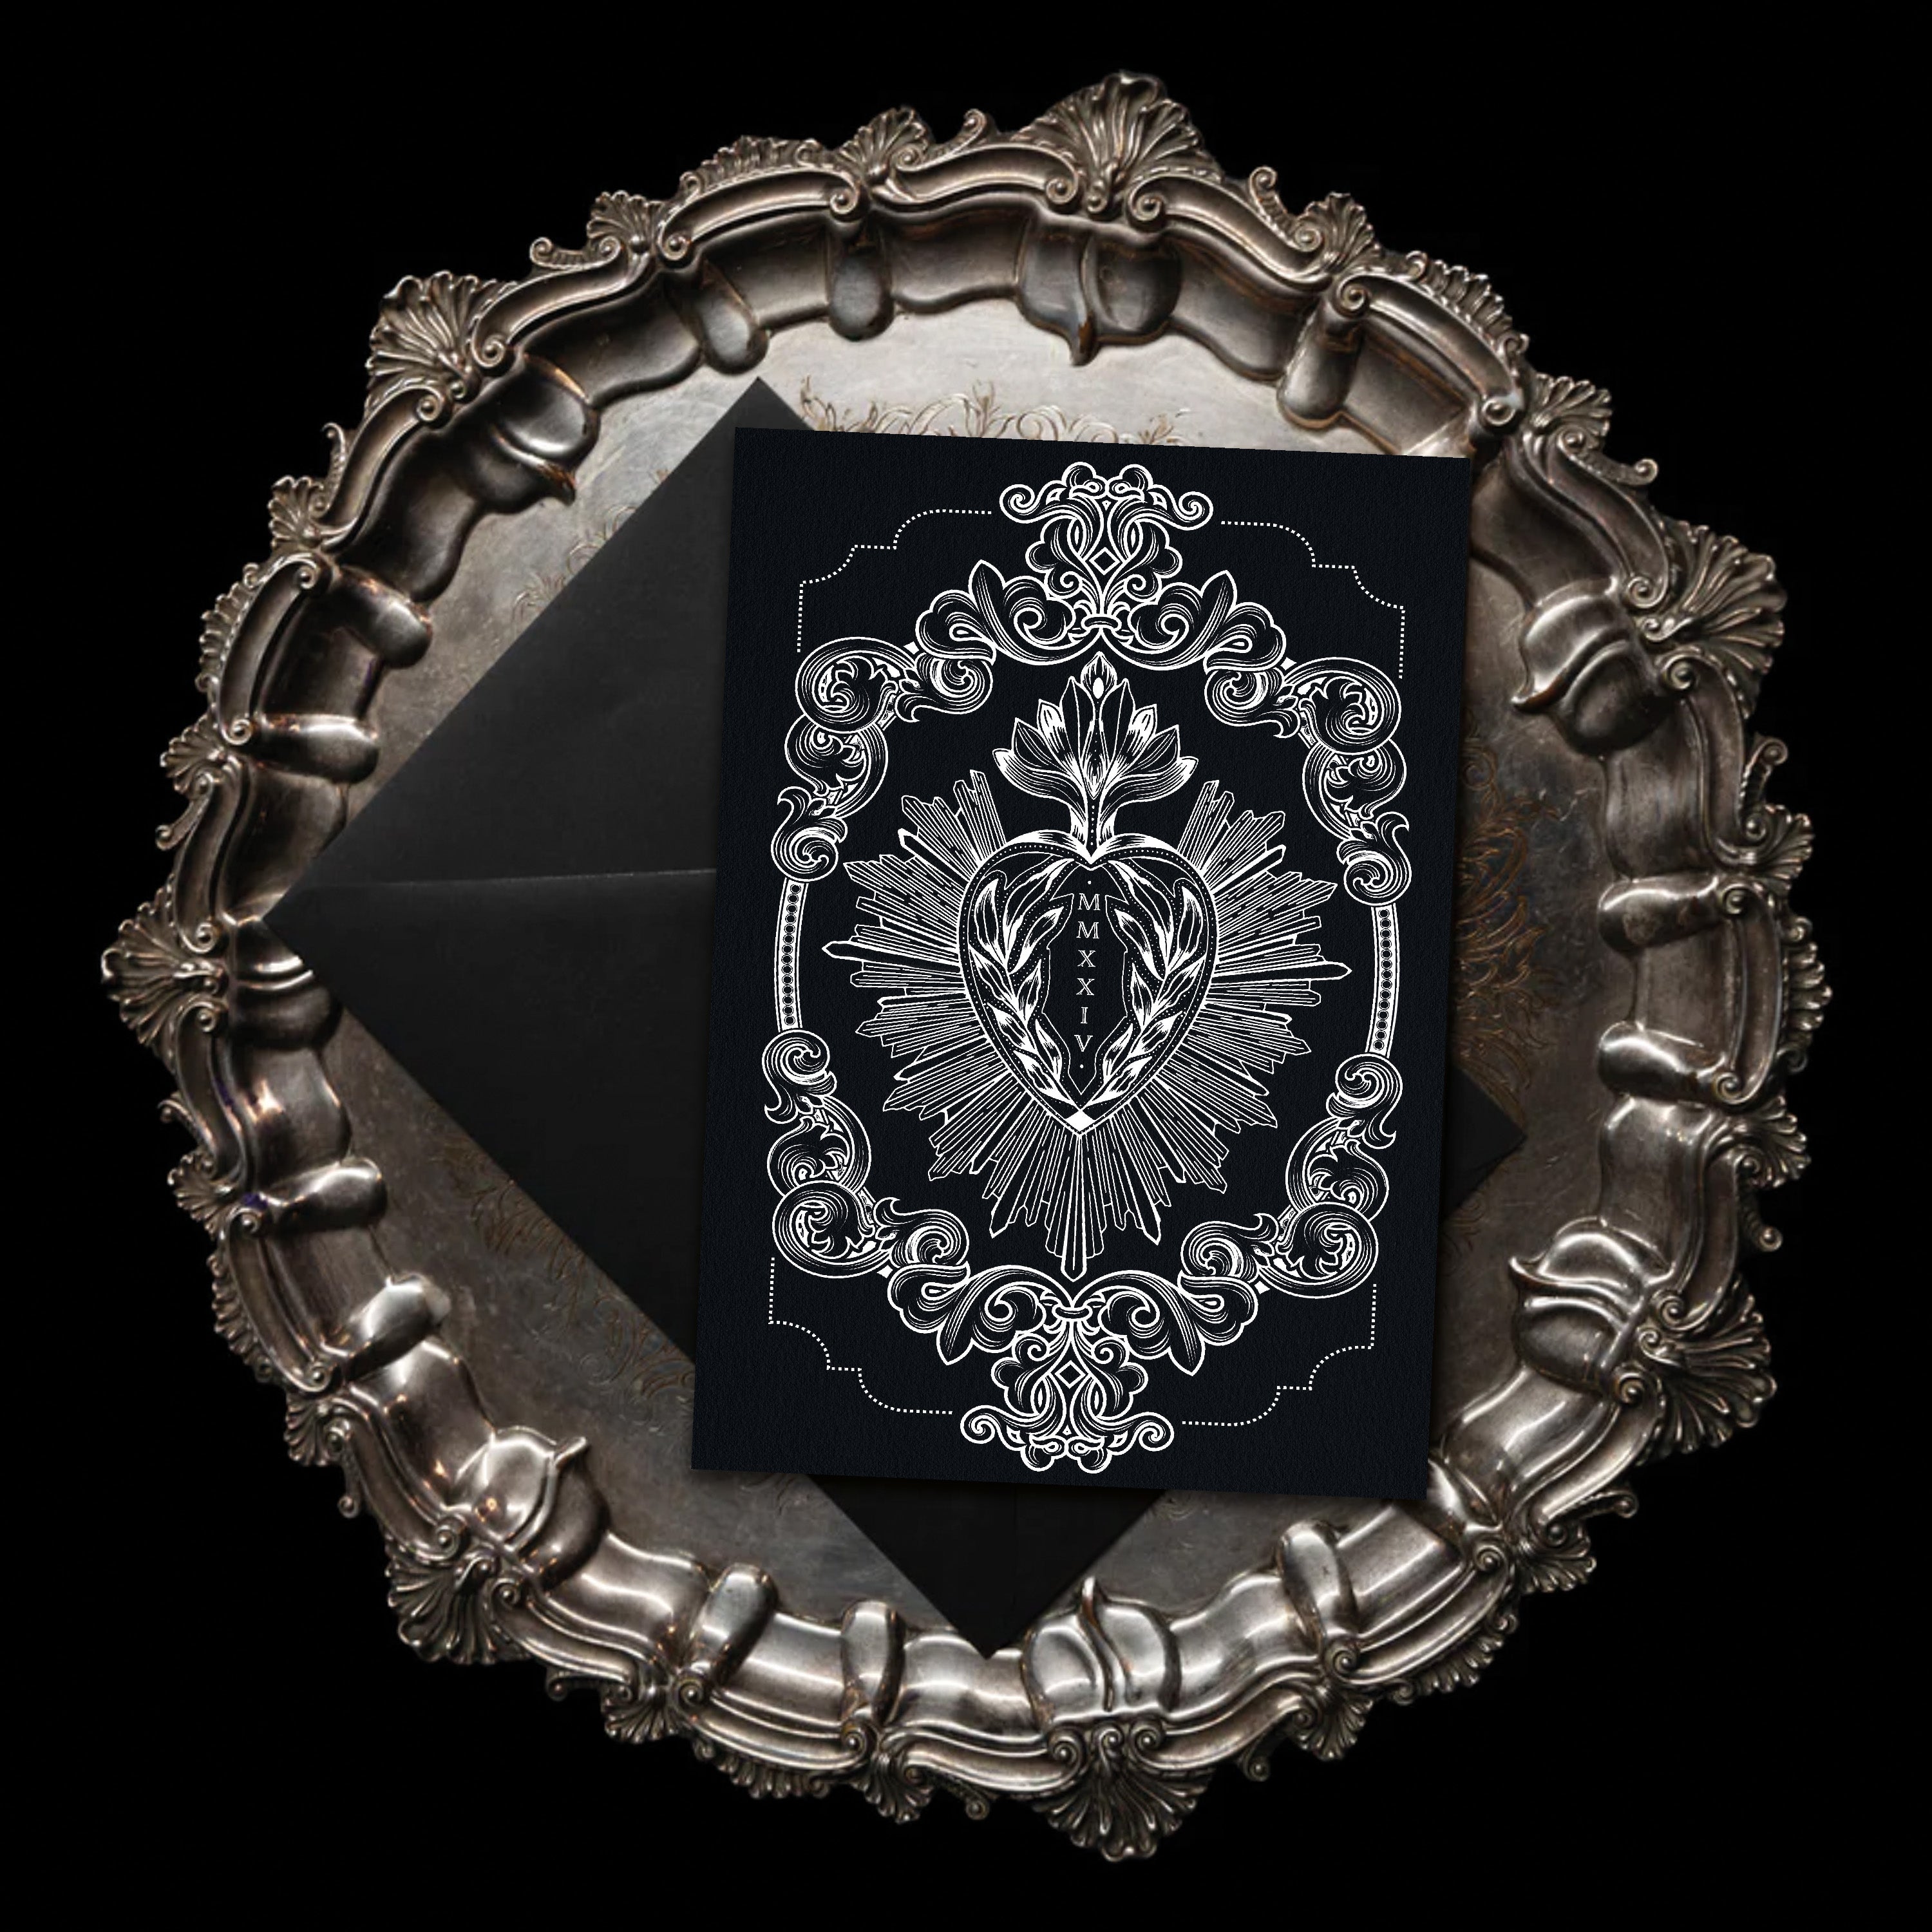 Sacred heart greetings card - the Blackened Teeth - gothic home decor 